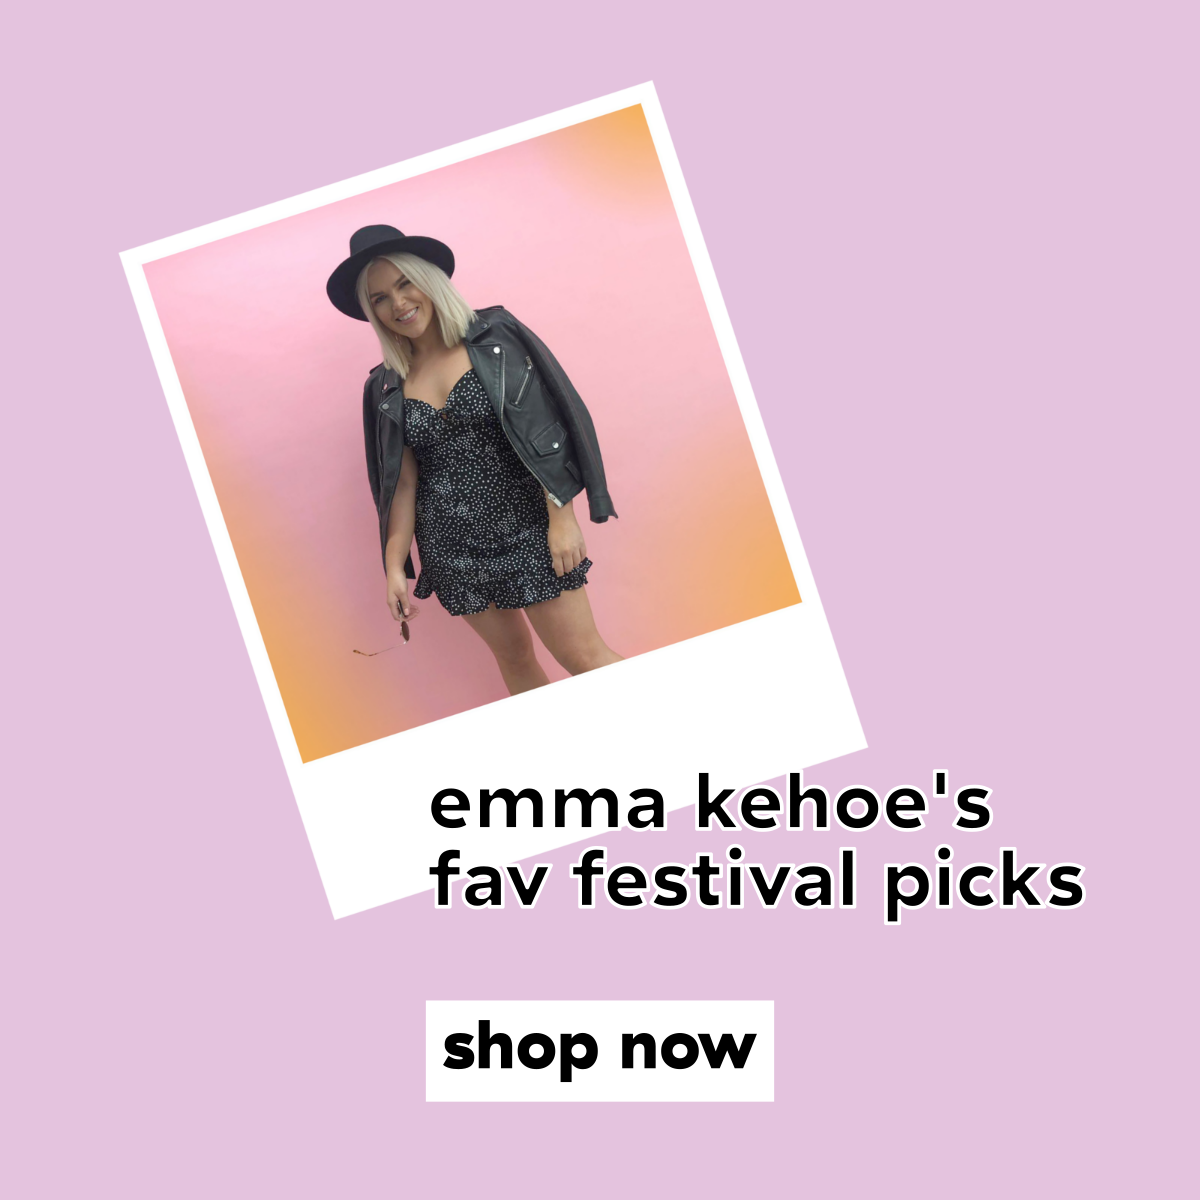 Dresses.ie - Get Festival Ready With Emma K's Picks!